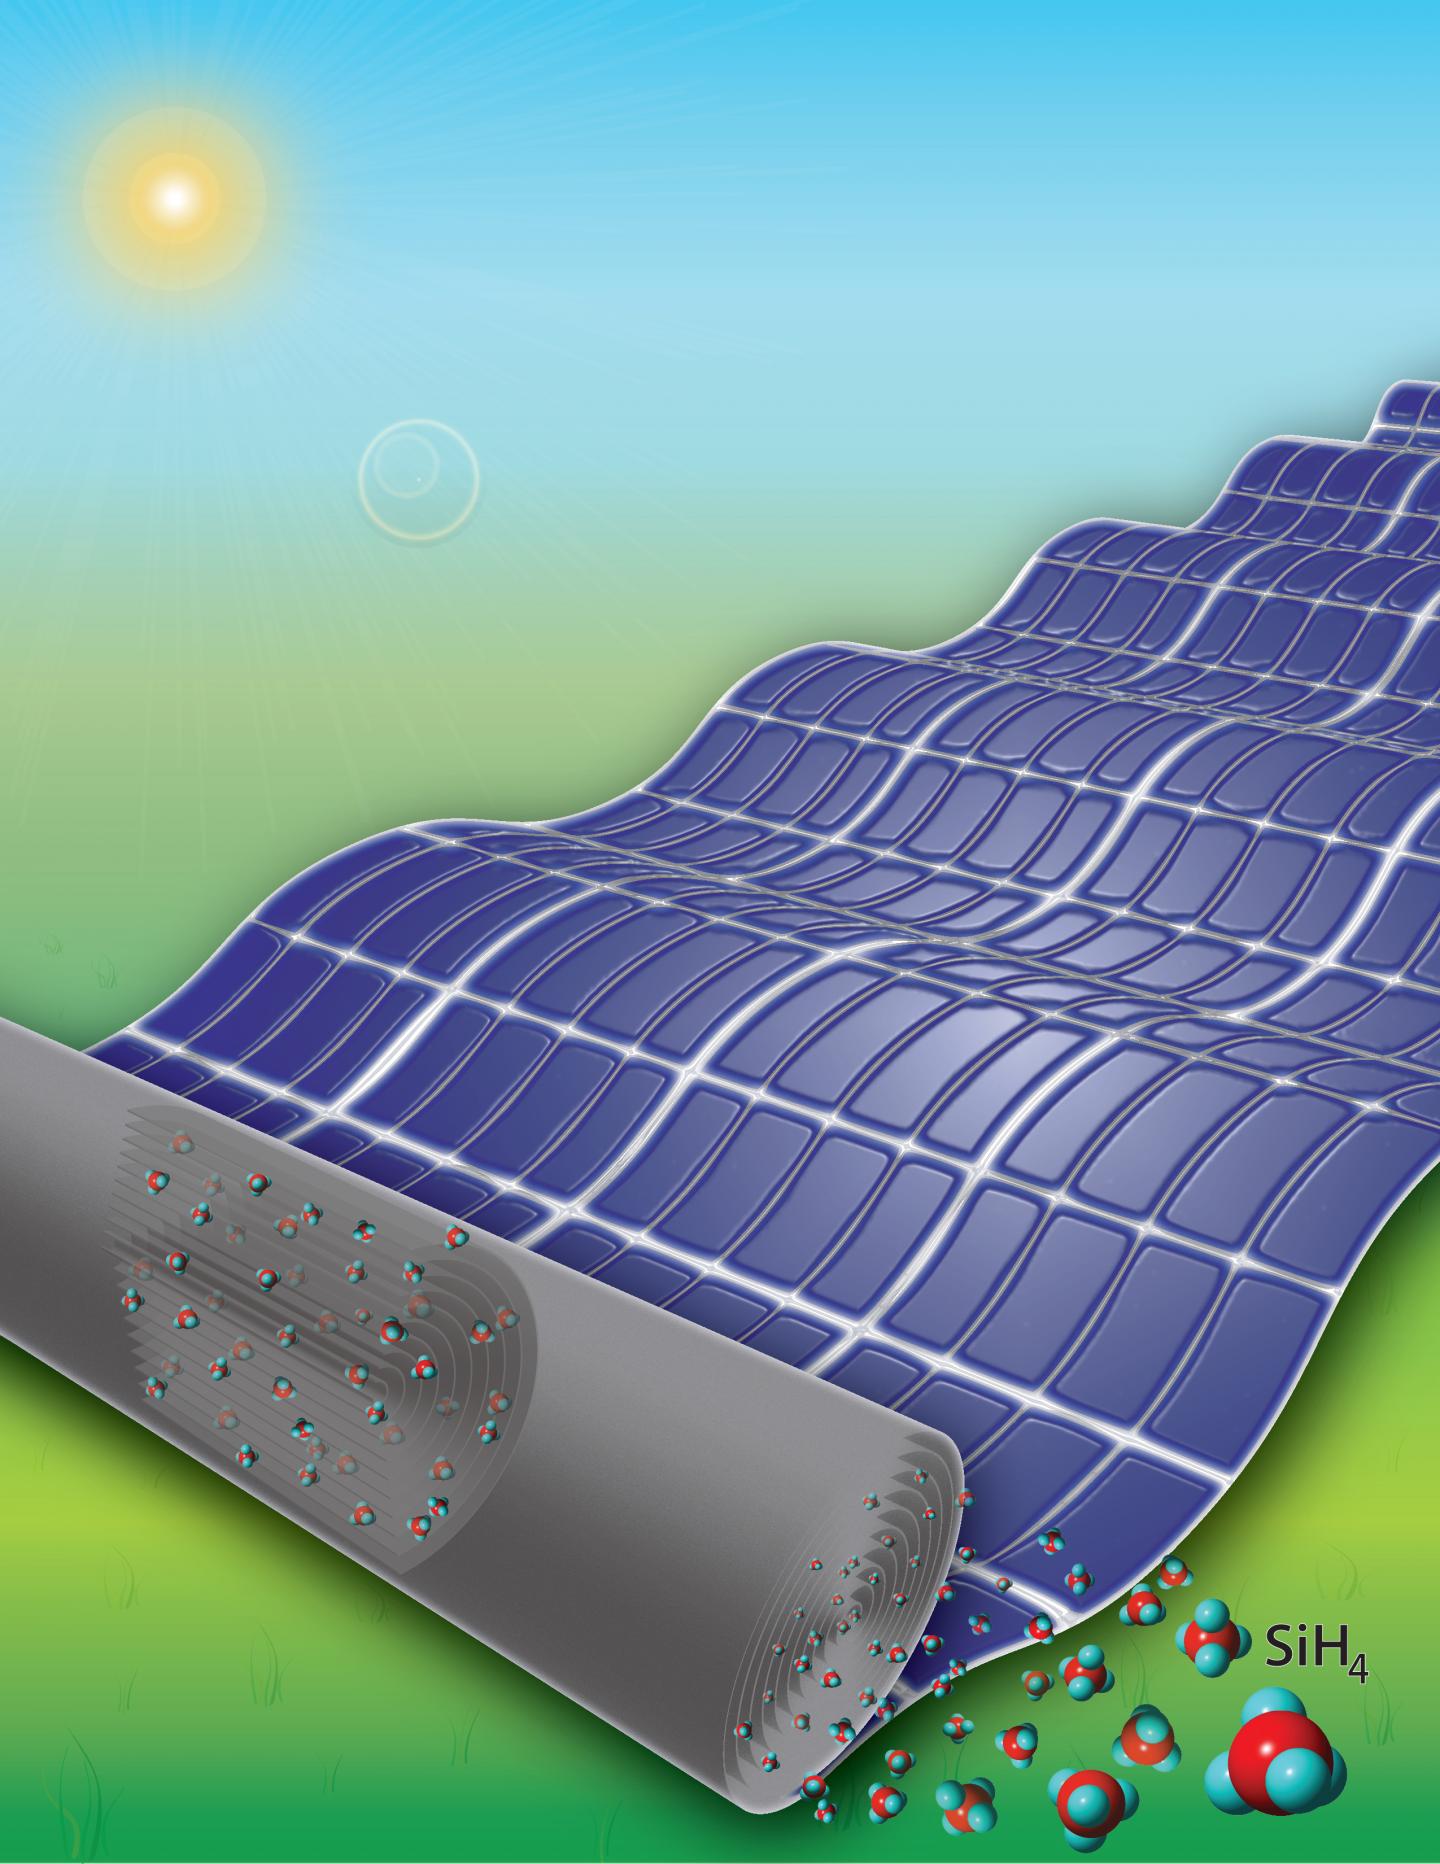 Under Pressure: New Technique Could Make Large, Flexible Solar Panels More Feasible